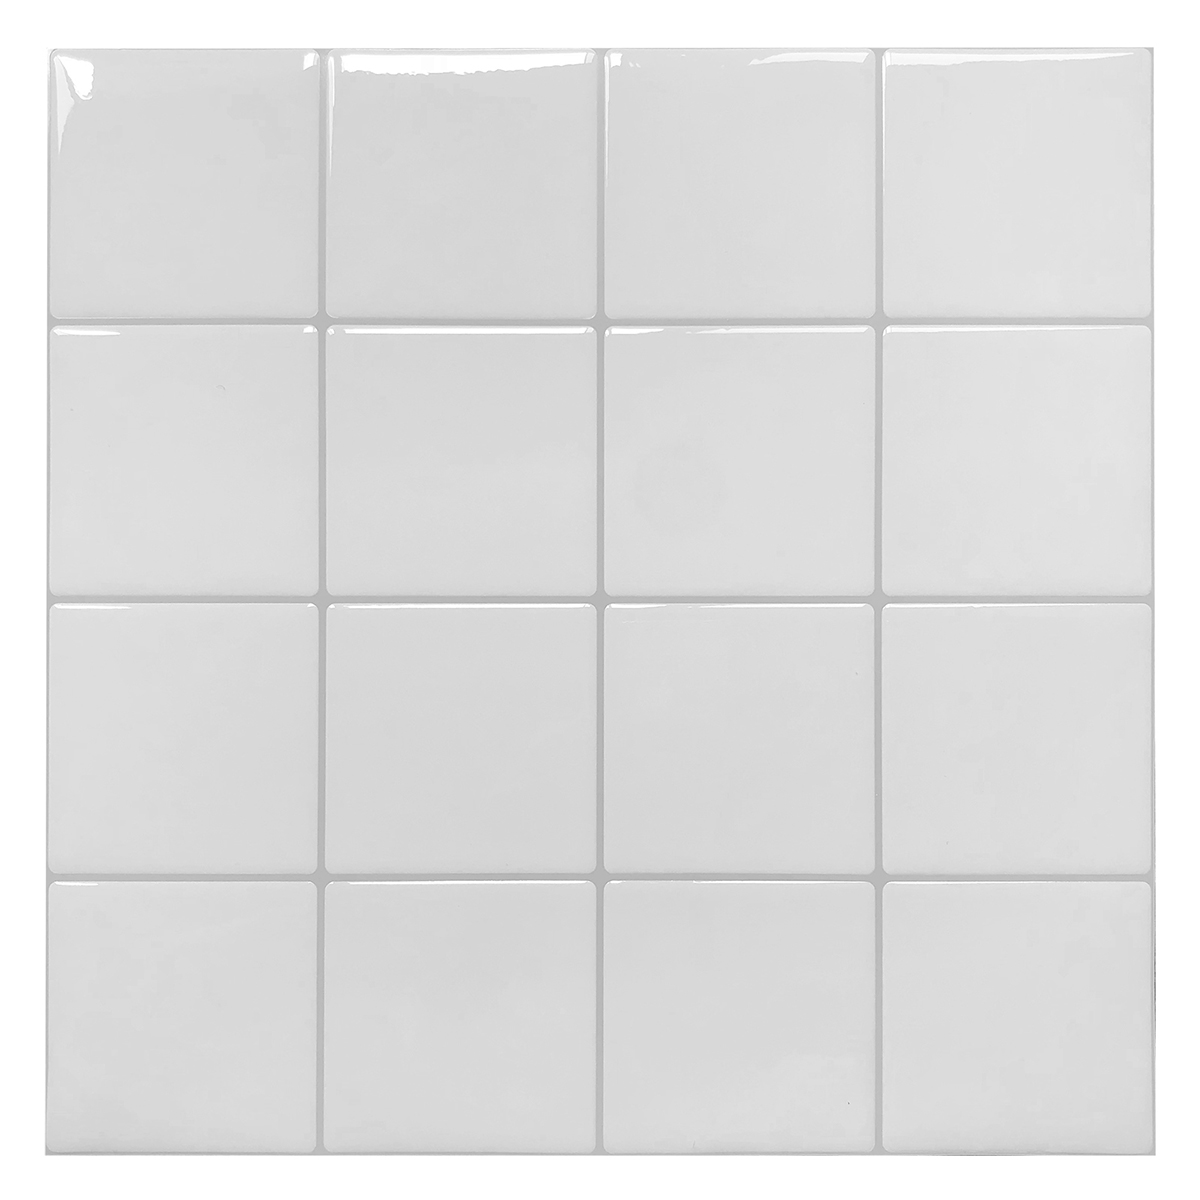 Art3d 10 Sheets Peel and Stick Tile for Kitchen Backsplash White Square Sticker